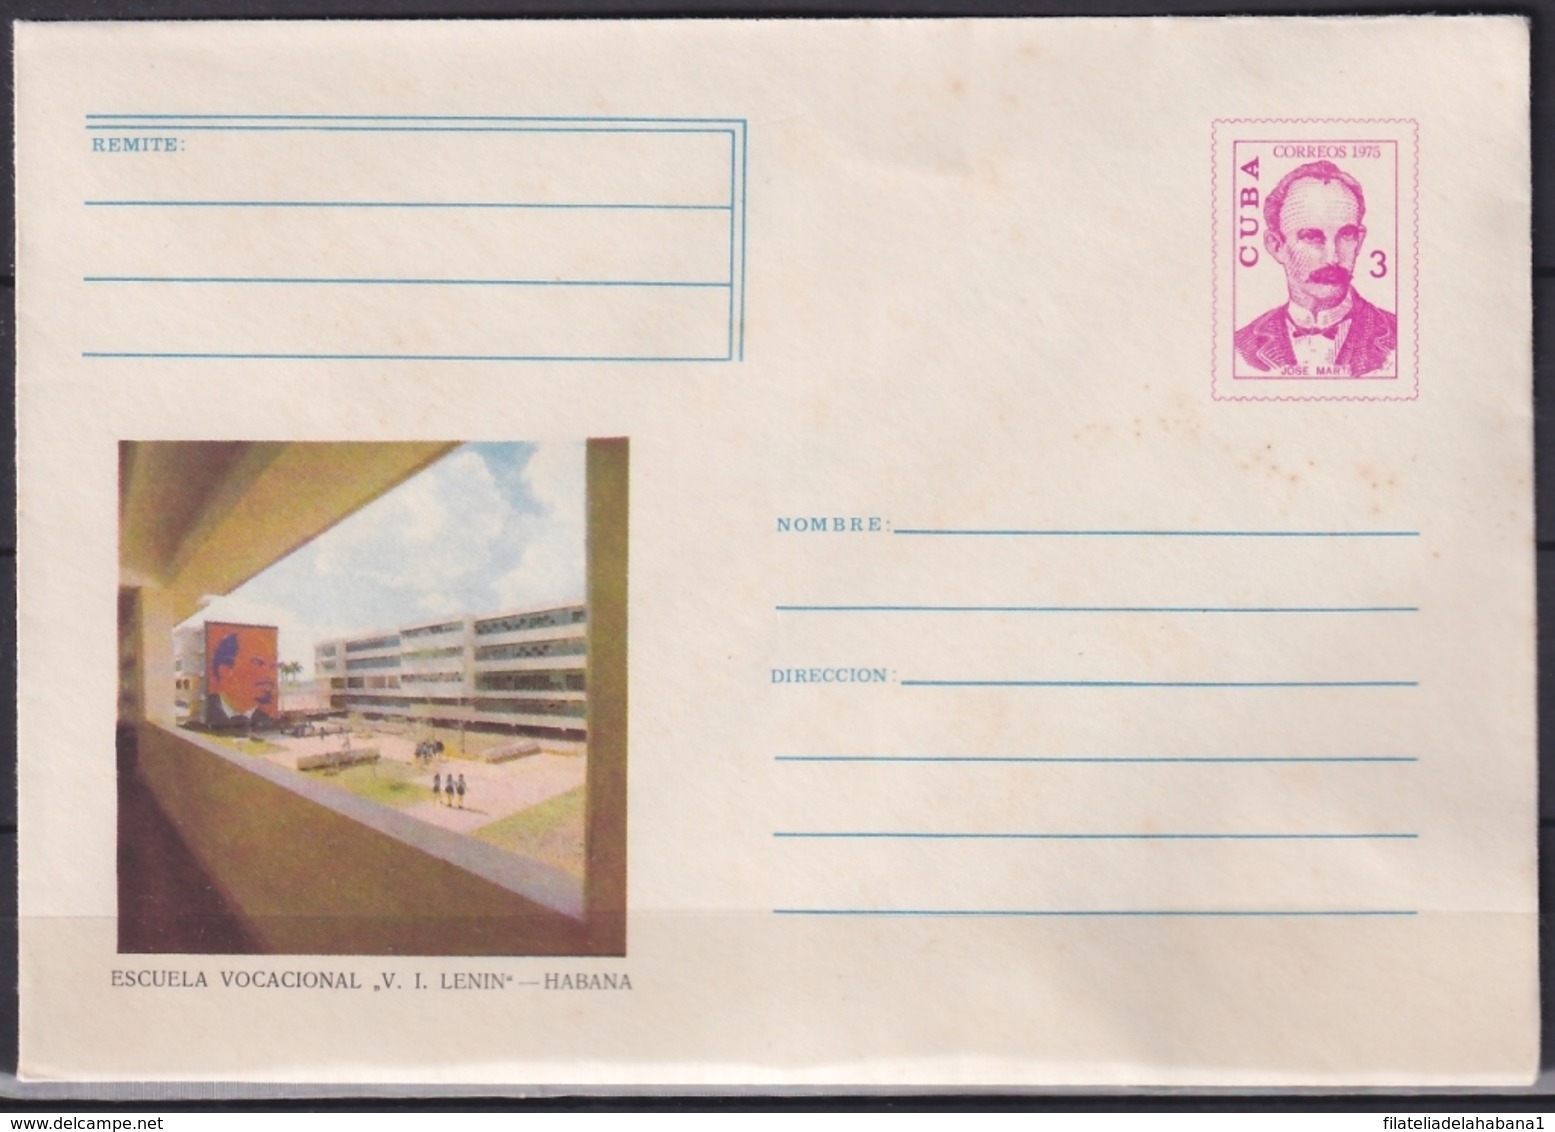 1975-EP-113 CUBA 1975 3c POSTAL STATIONERY COVER. HAVANA, ESCUELA VOCACIONAL LENIN. MANCHAS. - Brieven En Documenten